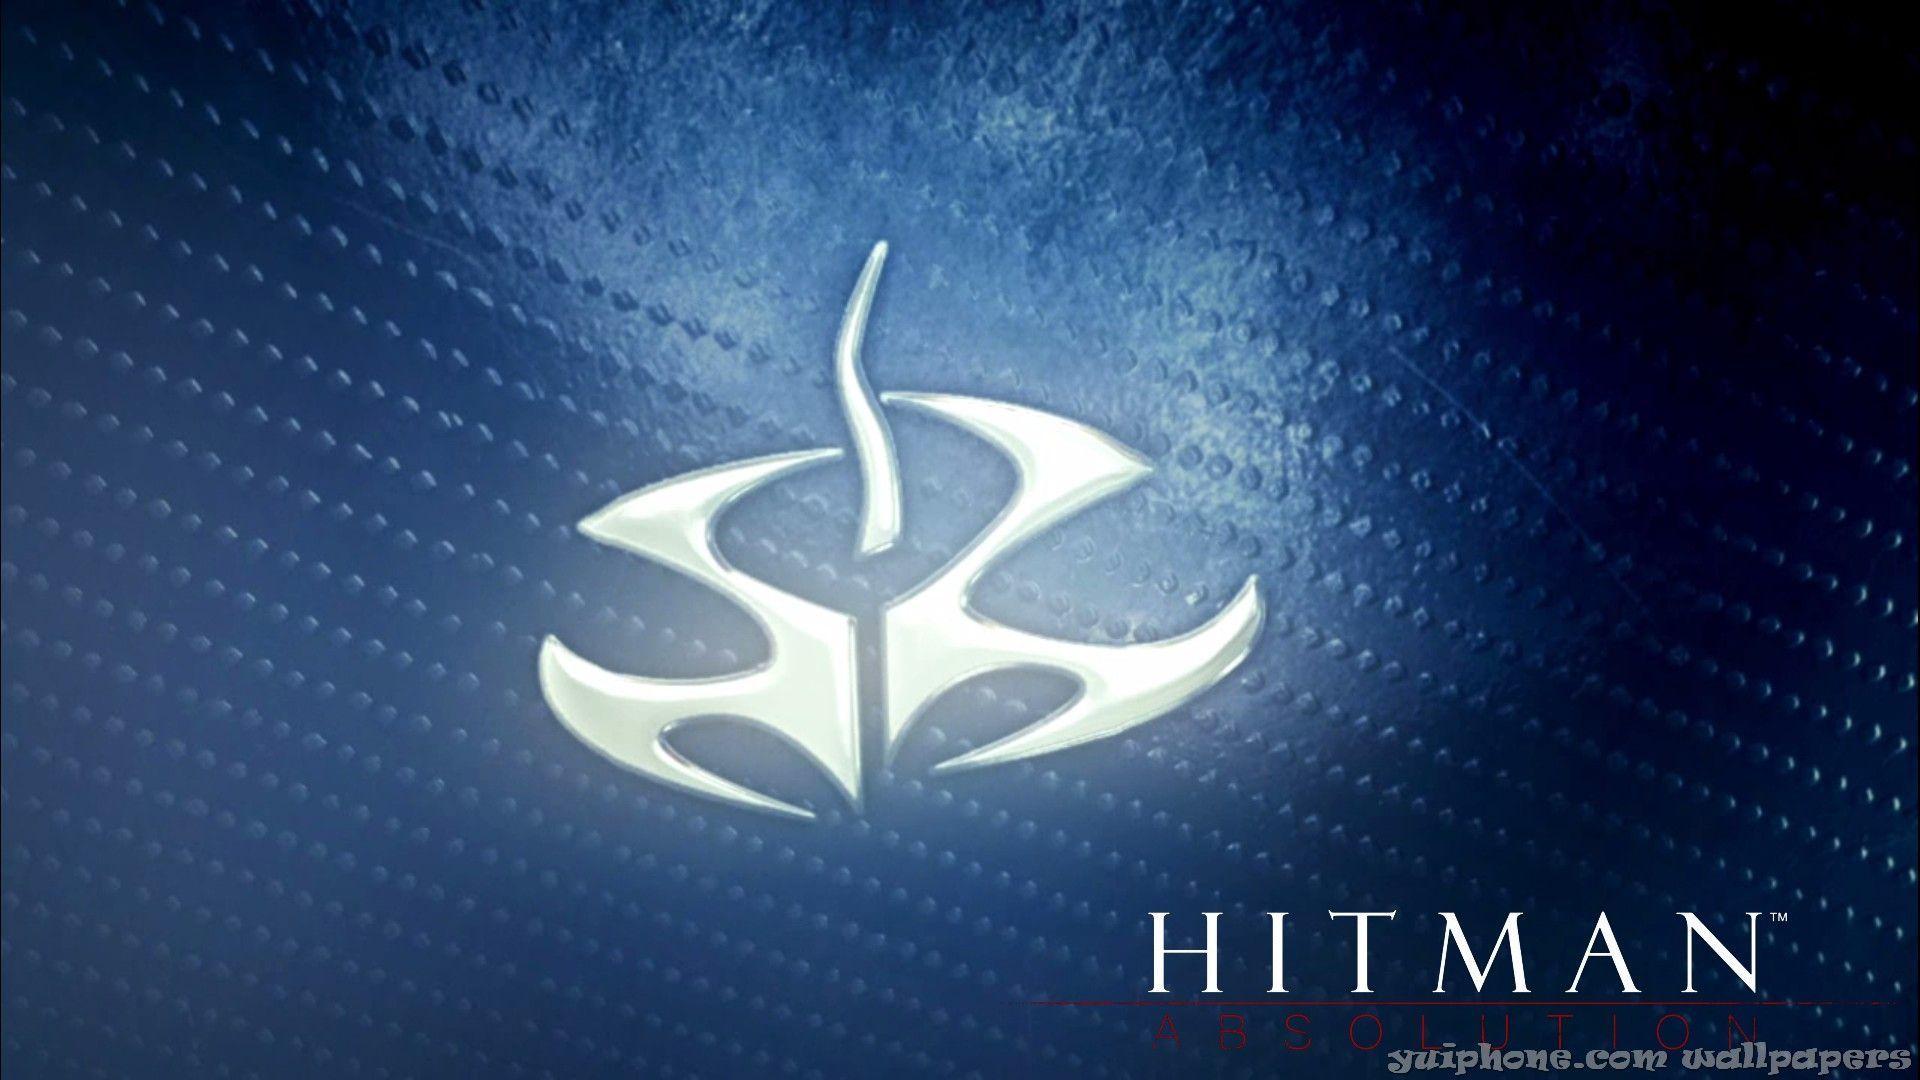 Image For > Hitman Logo Wallpapers